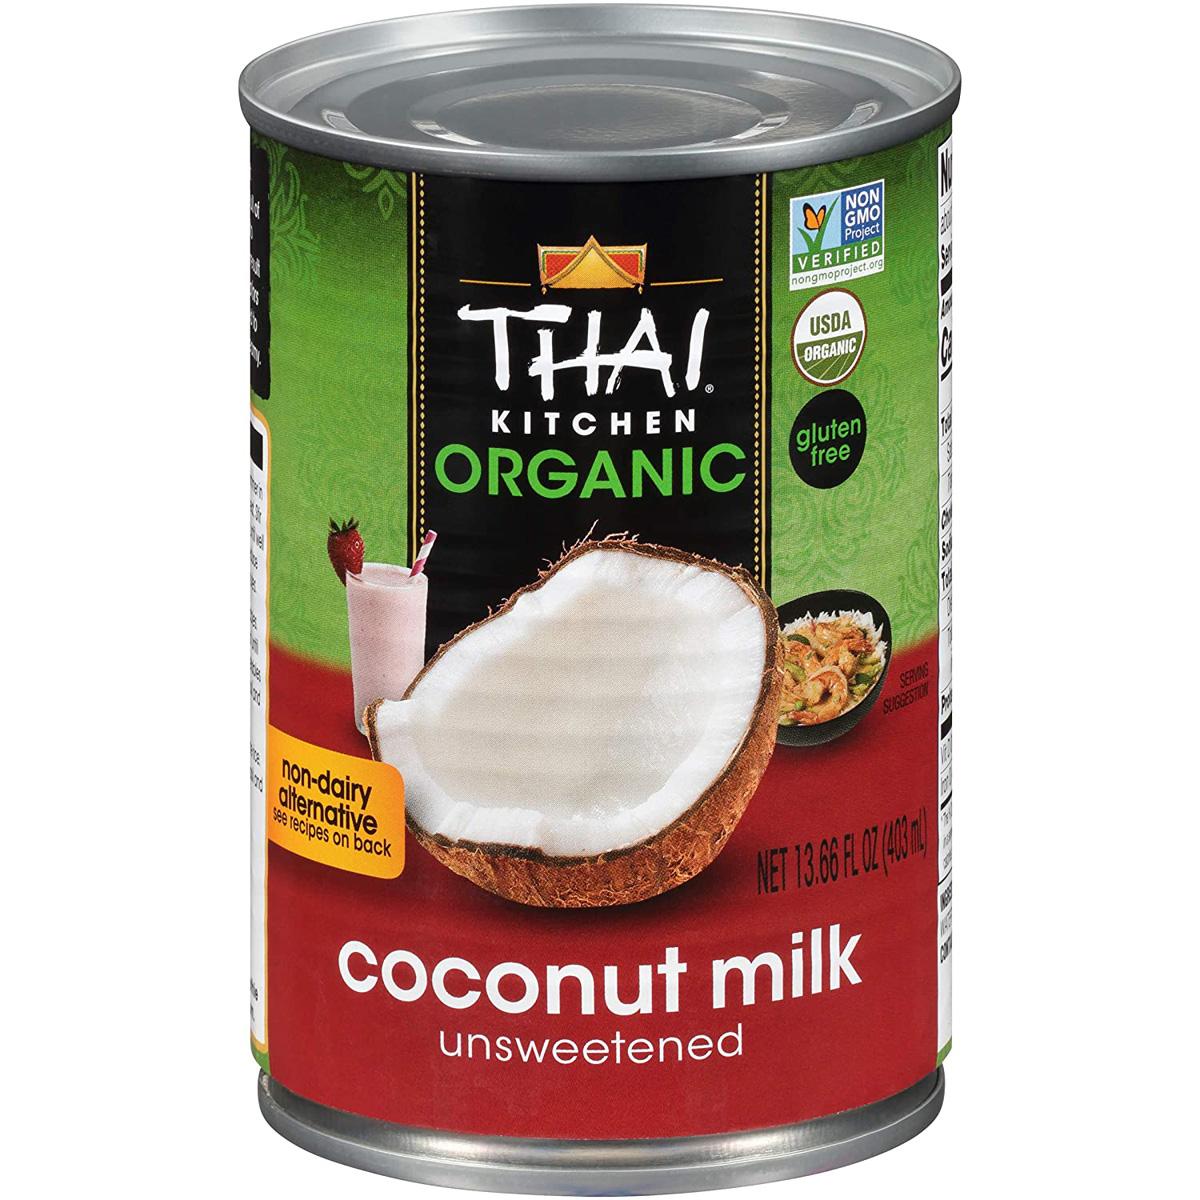 6 Thai Kitchen Organic Coconut Milk for $6.83 Shipped